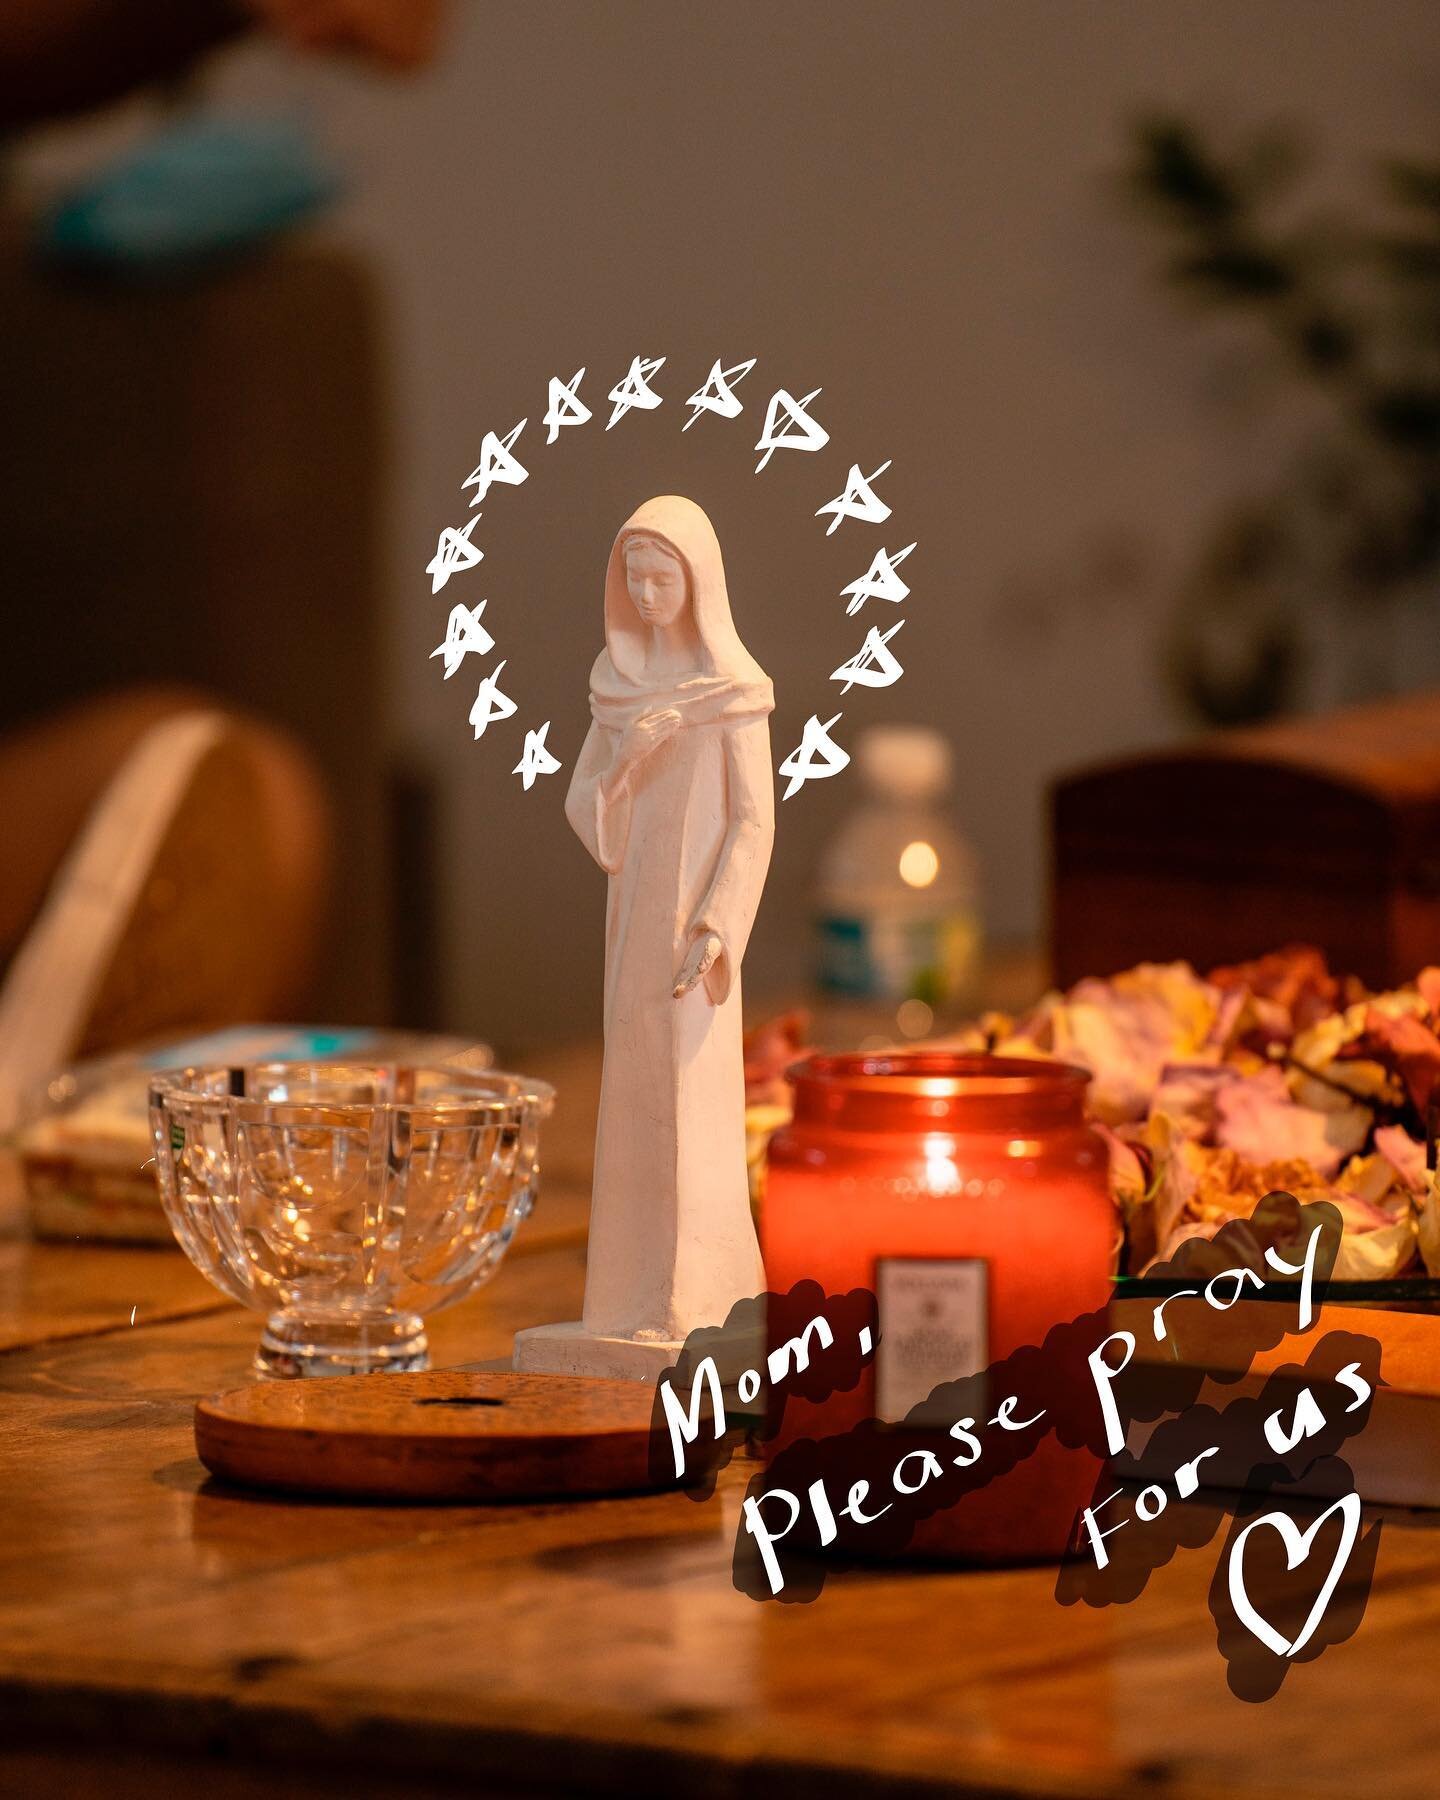 Our Mother Mary, please pray for us.
.⁣
.⁣
.⁣
.⁣
.⁣
#praytherosary #jesuslovesyou #sacred #prayer #catholic #pray #amen  #christian #rosary #mothermary  #littleflower #faith #virginmary #avemaria #letuspray #catholicchurch #hope #holyspirit #divineme